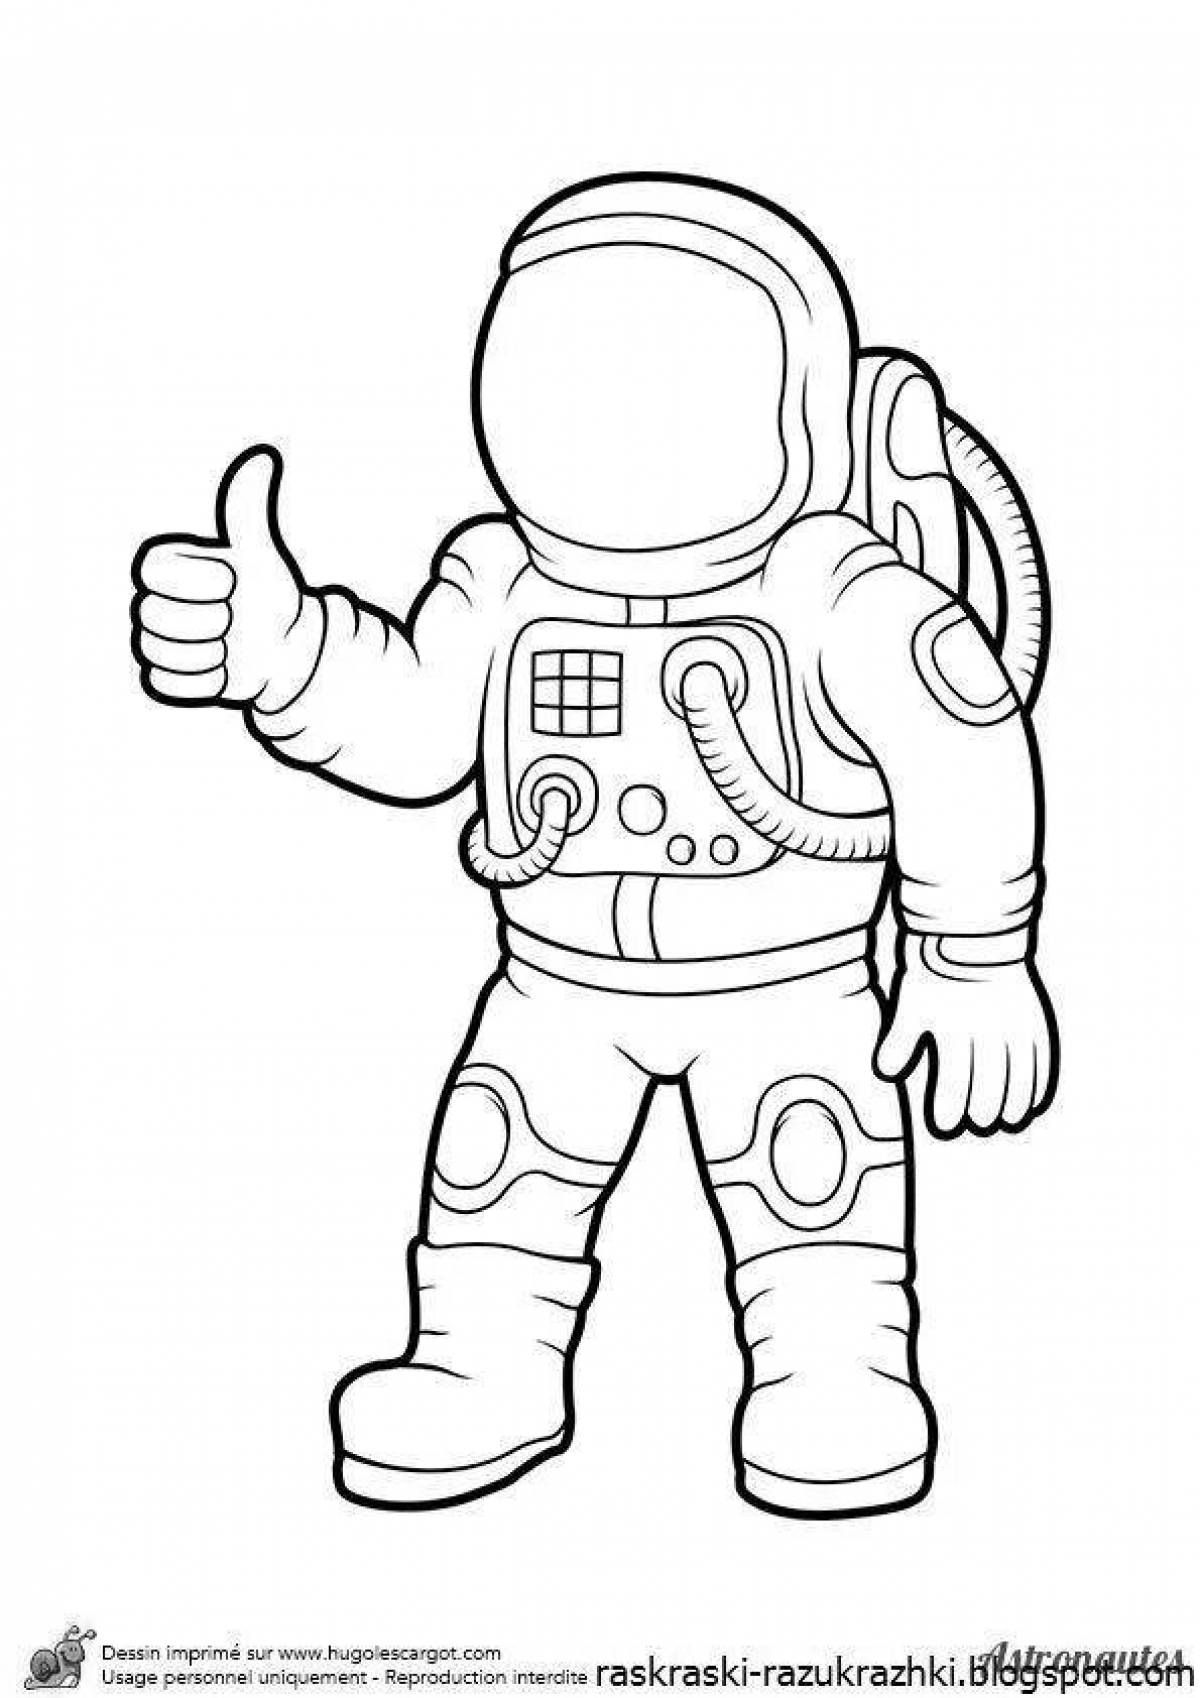 Скафандр раскраска. Раскраска космонавт в скафандре. Космонавт раскраска для детей. Раскраска Космонавта в скафандре для детей. Космонавт раскраска для малышей.